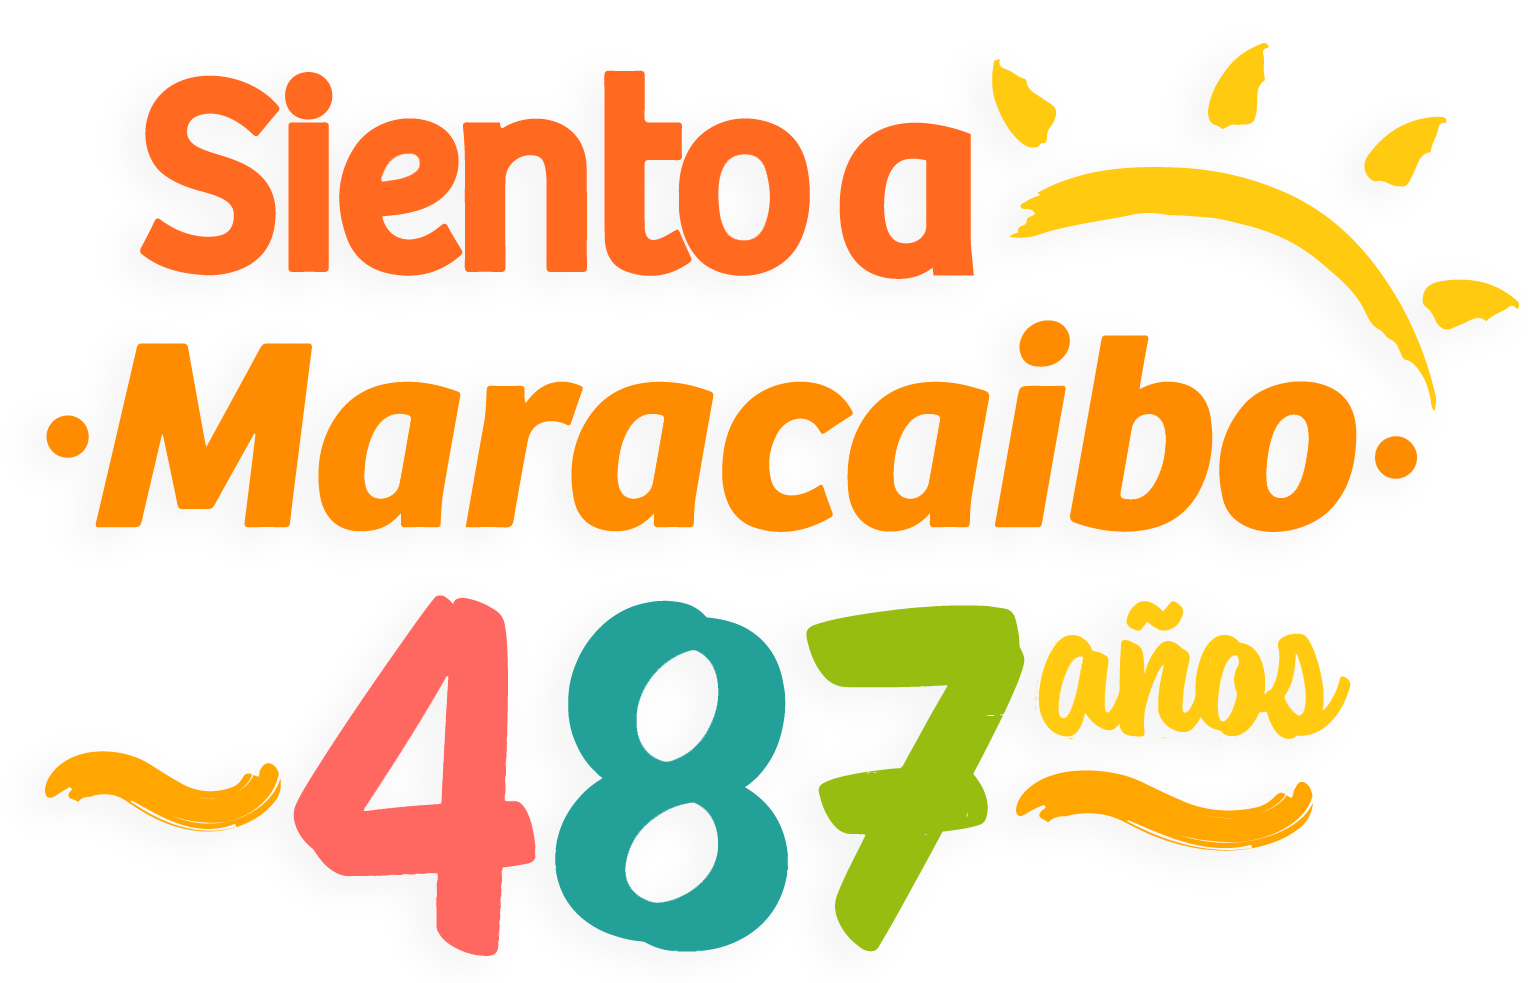 siento maracaibo-01